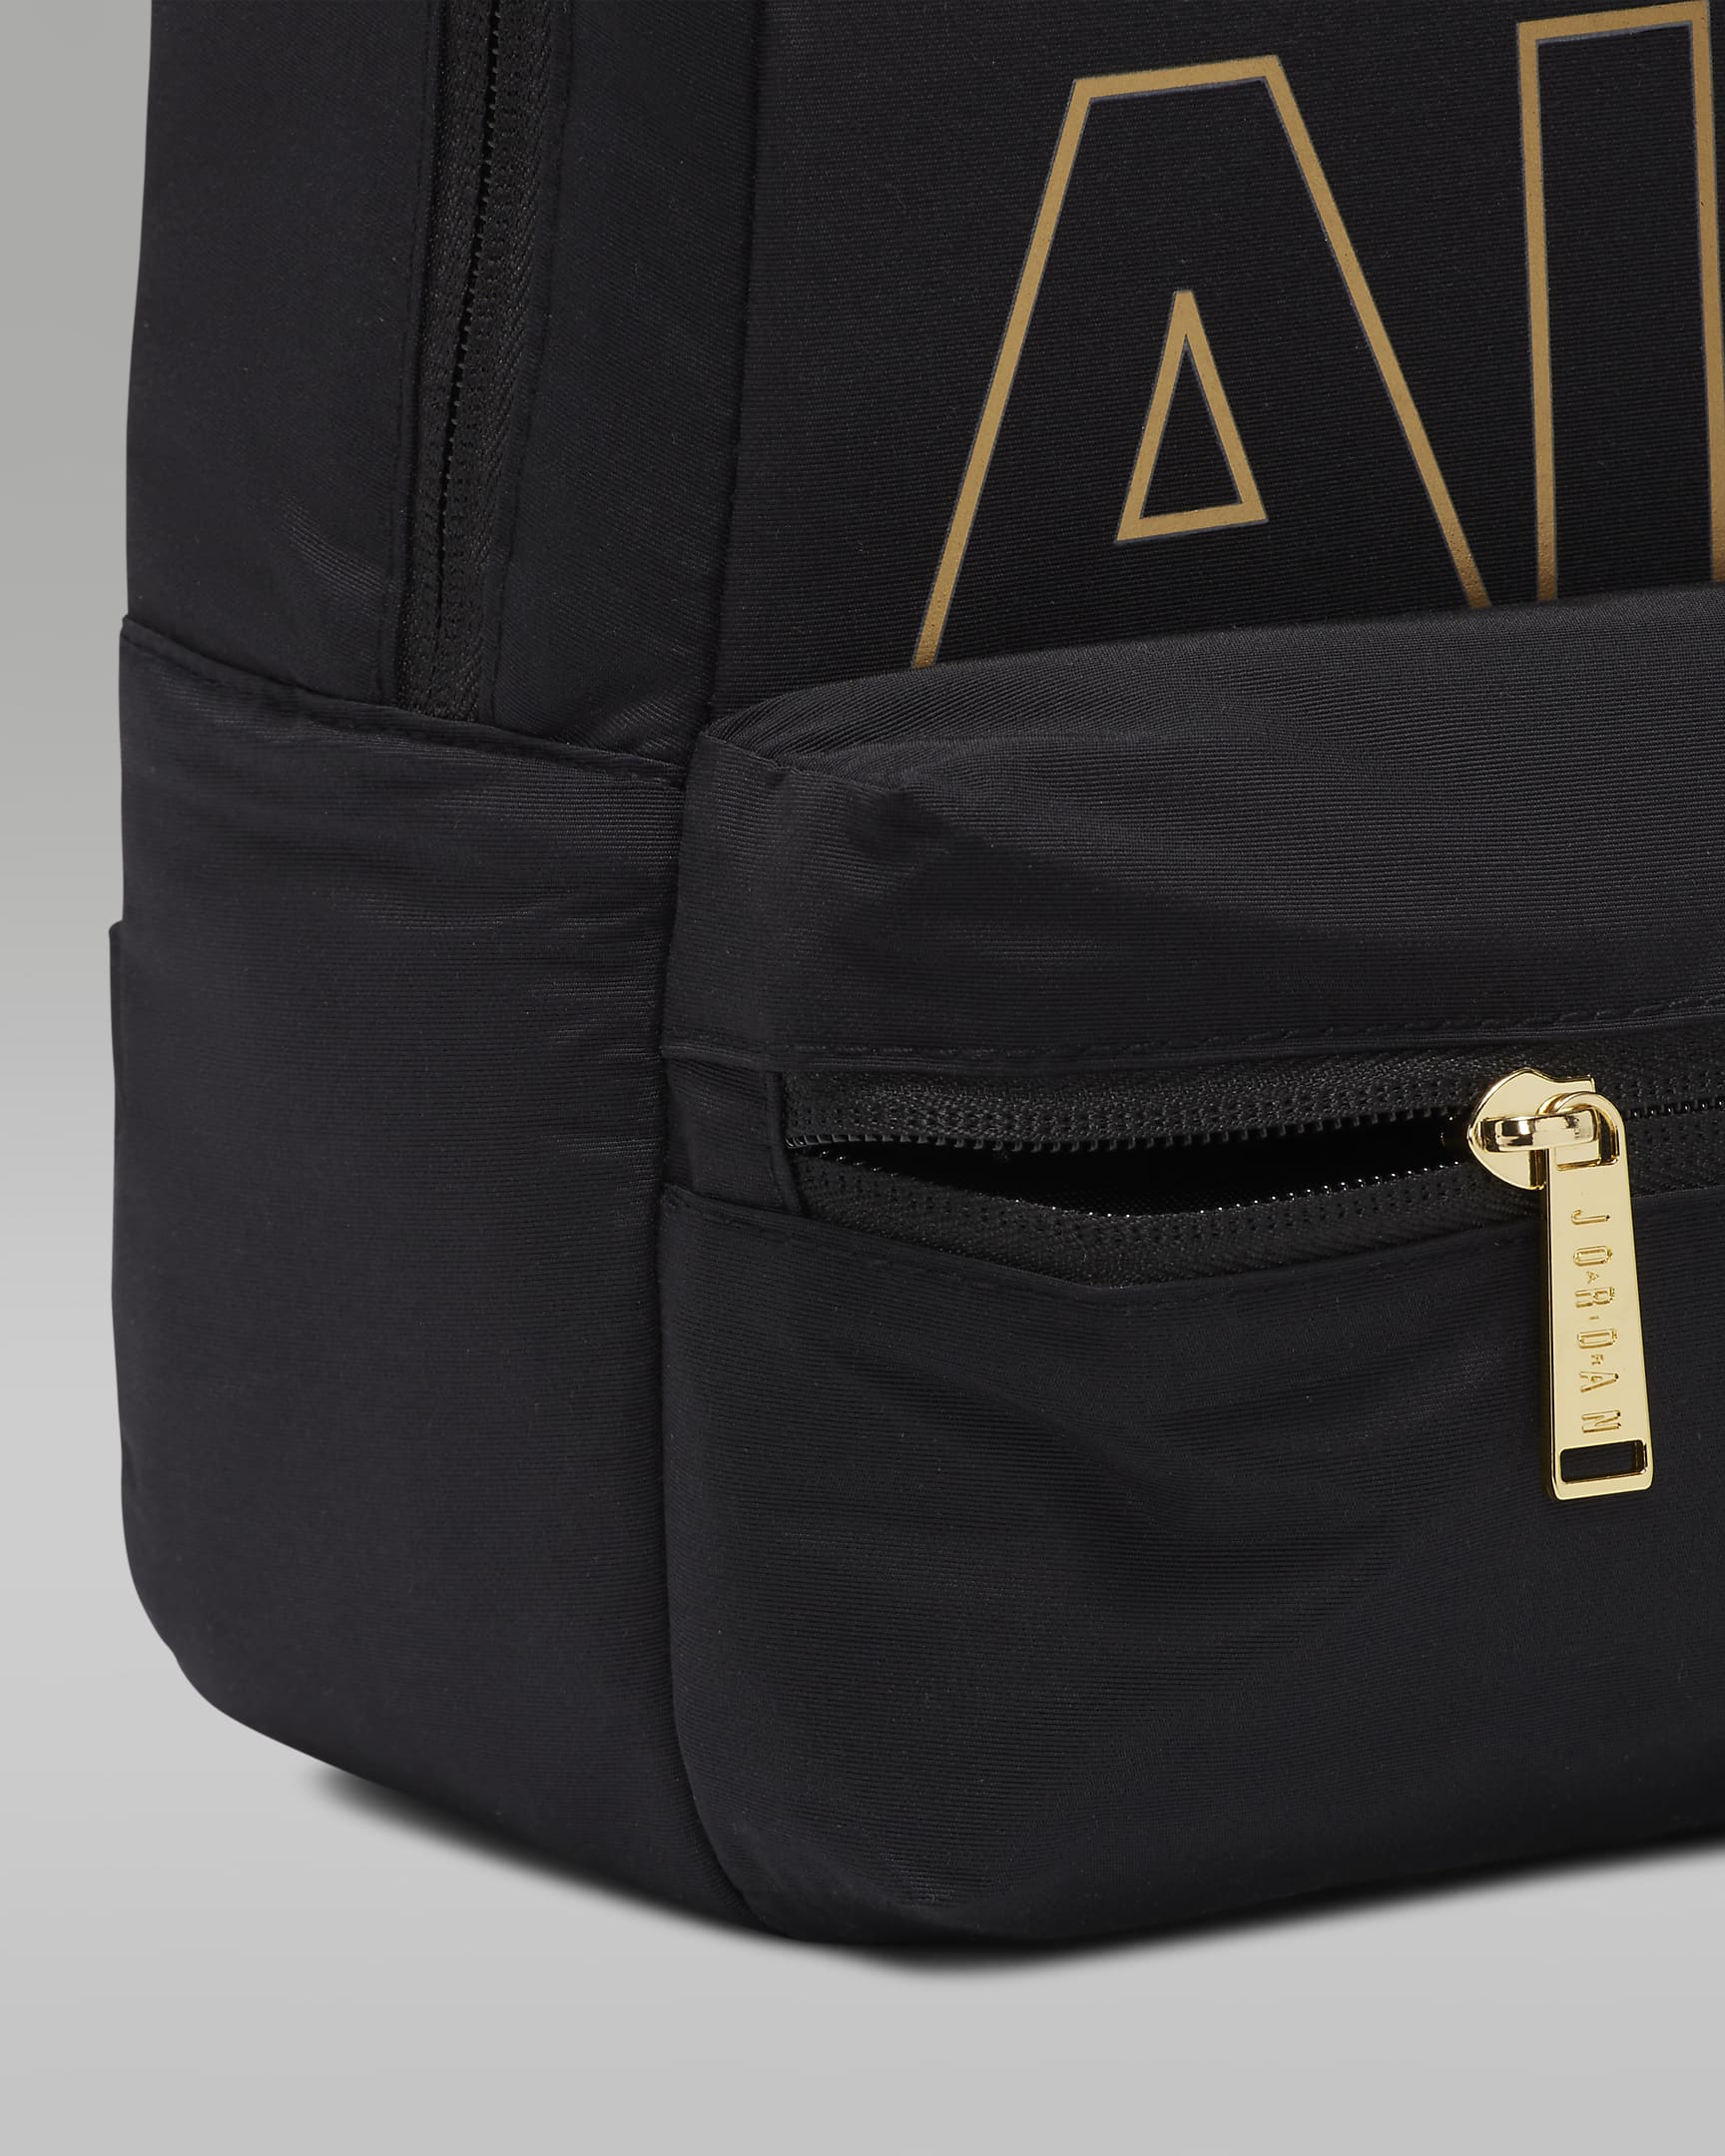 Jordan Black and Gold Backpack Medium Backpack. Nike JP